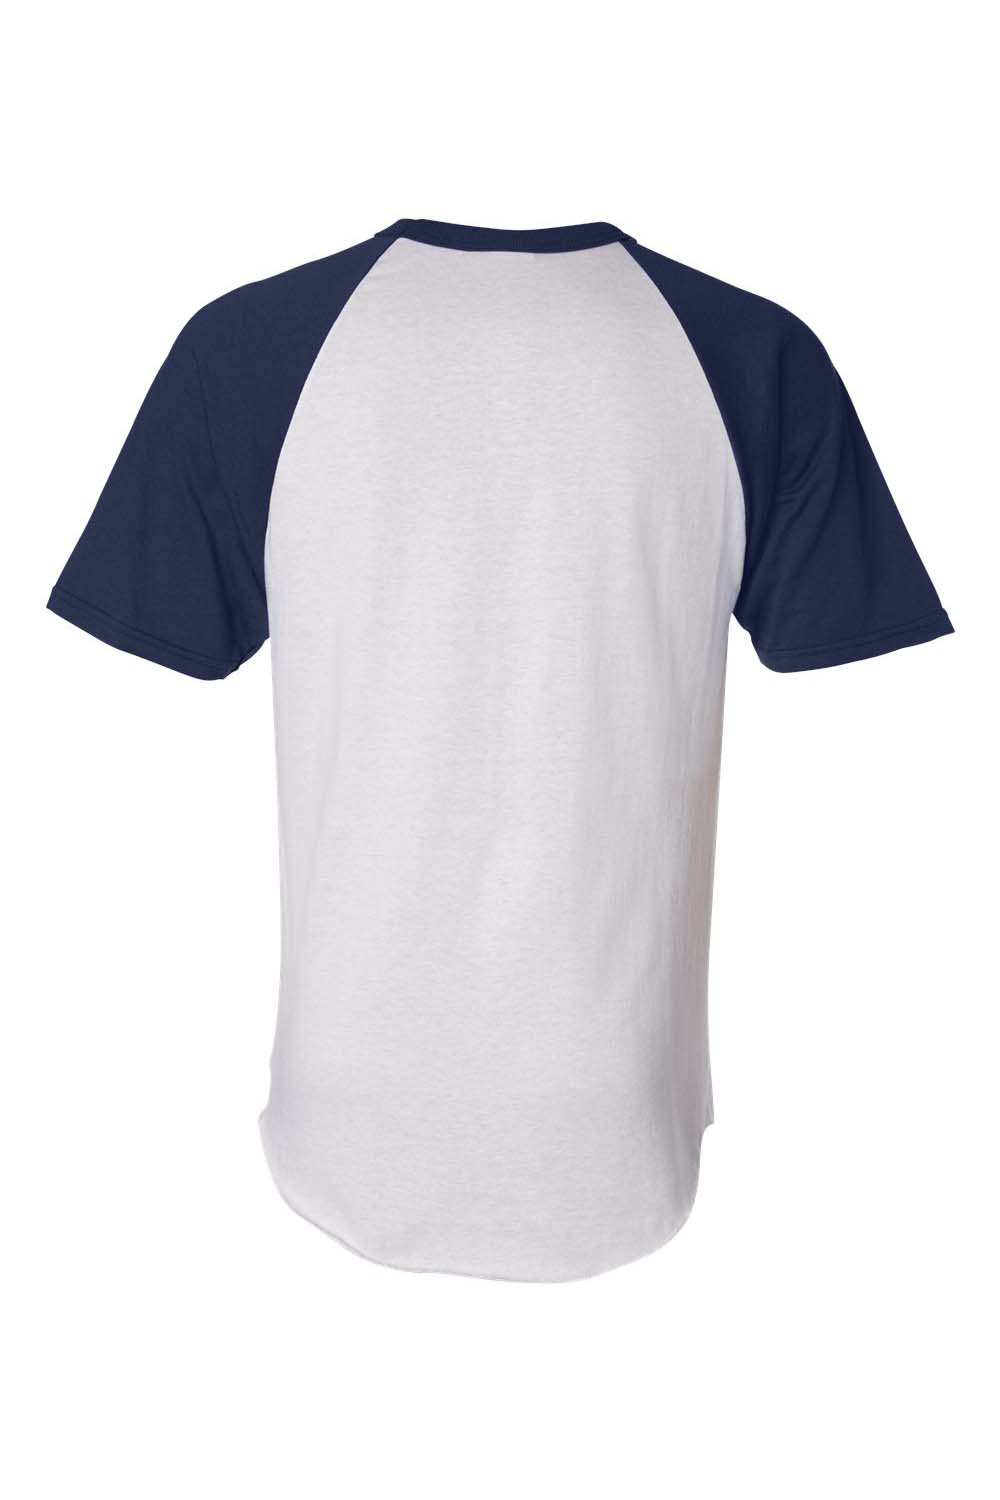 Augusta Sportswear 423 Mens Short Sleeve Crewneck T-Shirt White/Navy Blue Model Flat Back